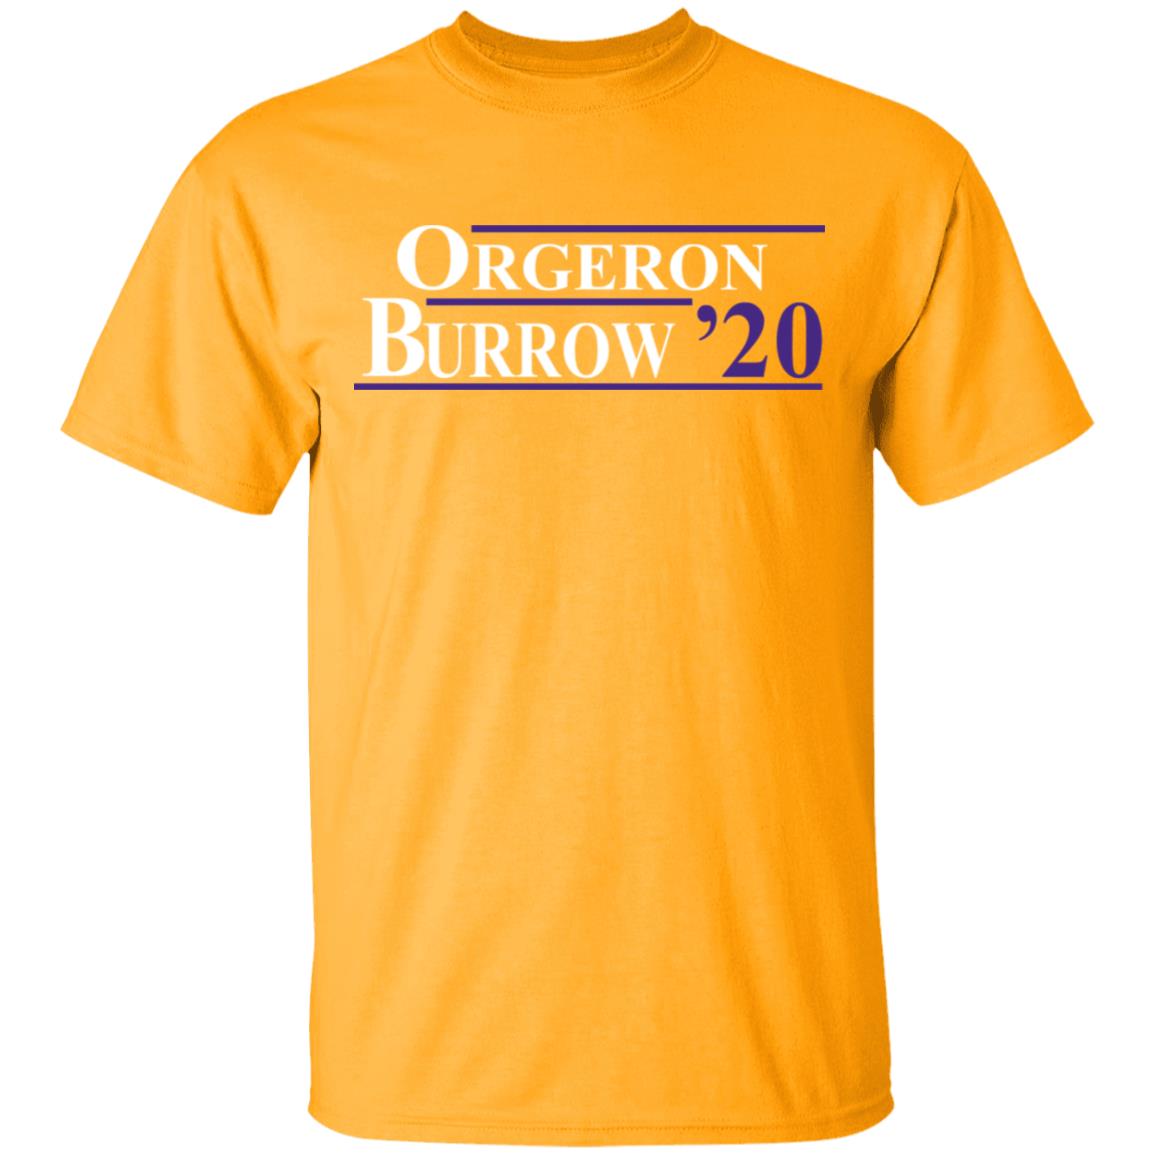 2020 Burrow